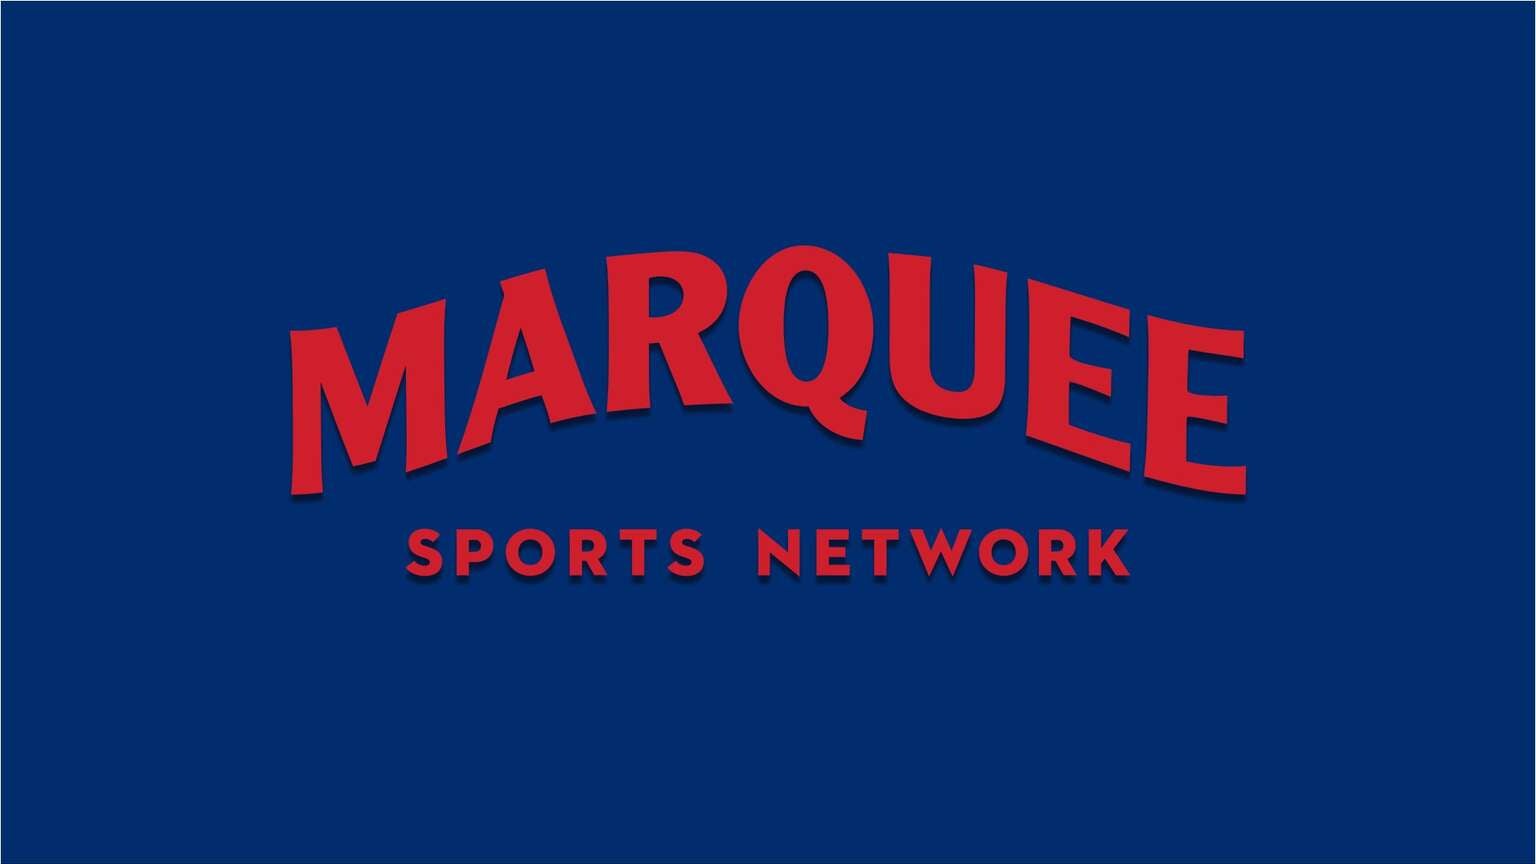 Marquee Sports Network 1536x864 Crop 